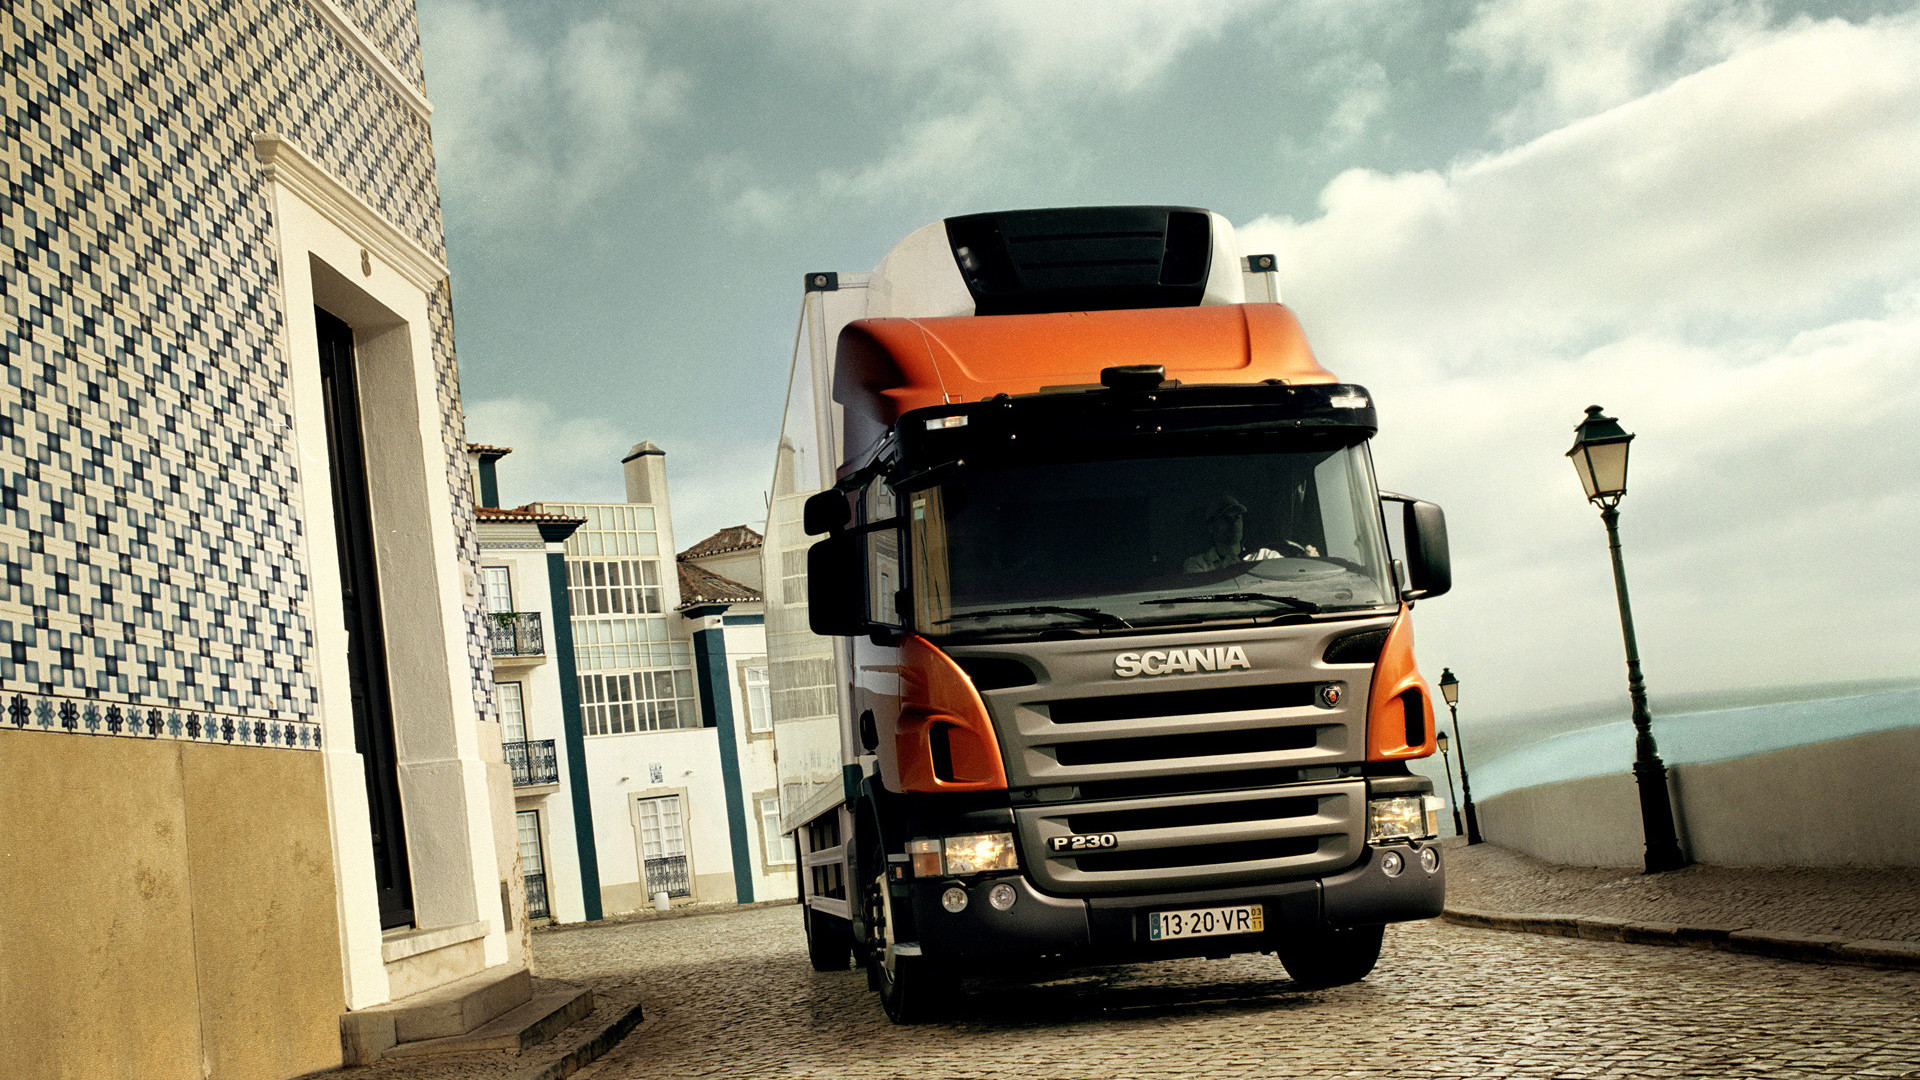 1920x1080 Orange Scania Truck Wallpaper 13974